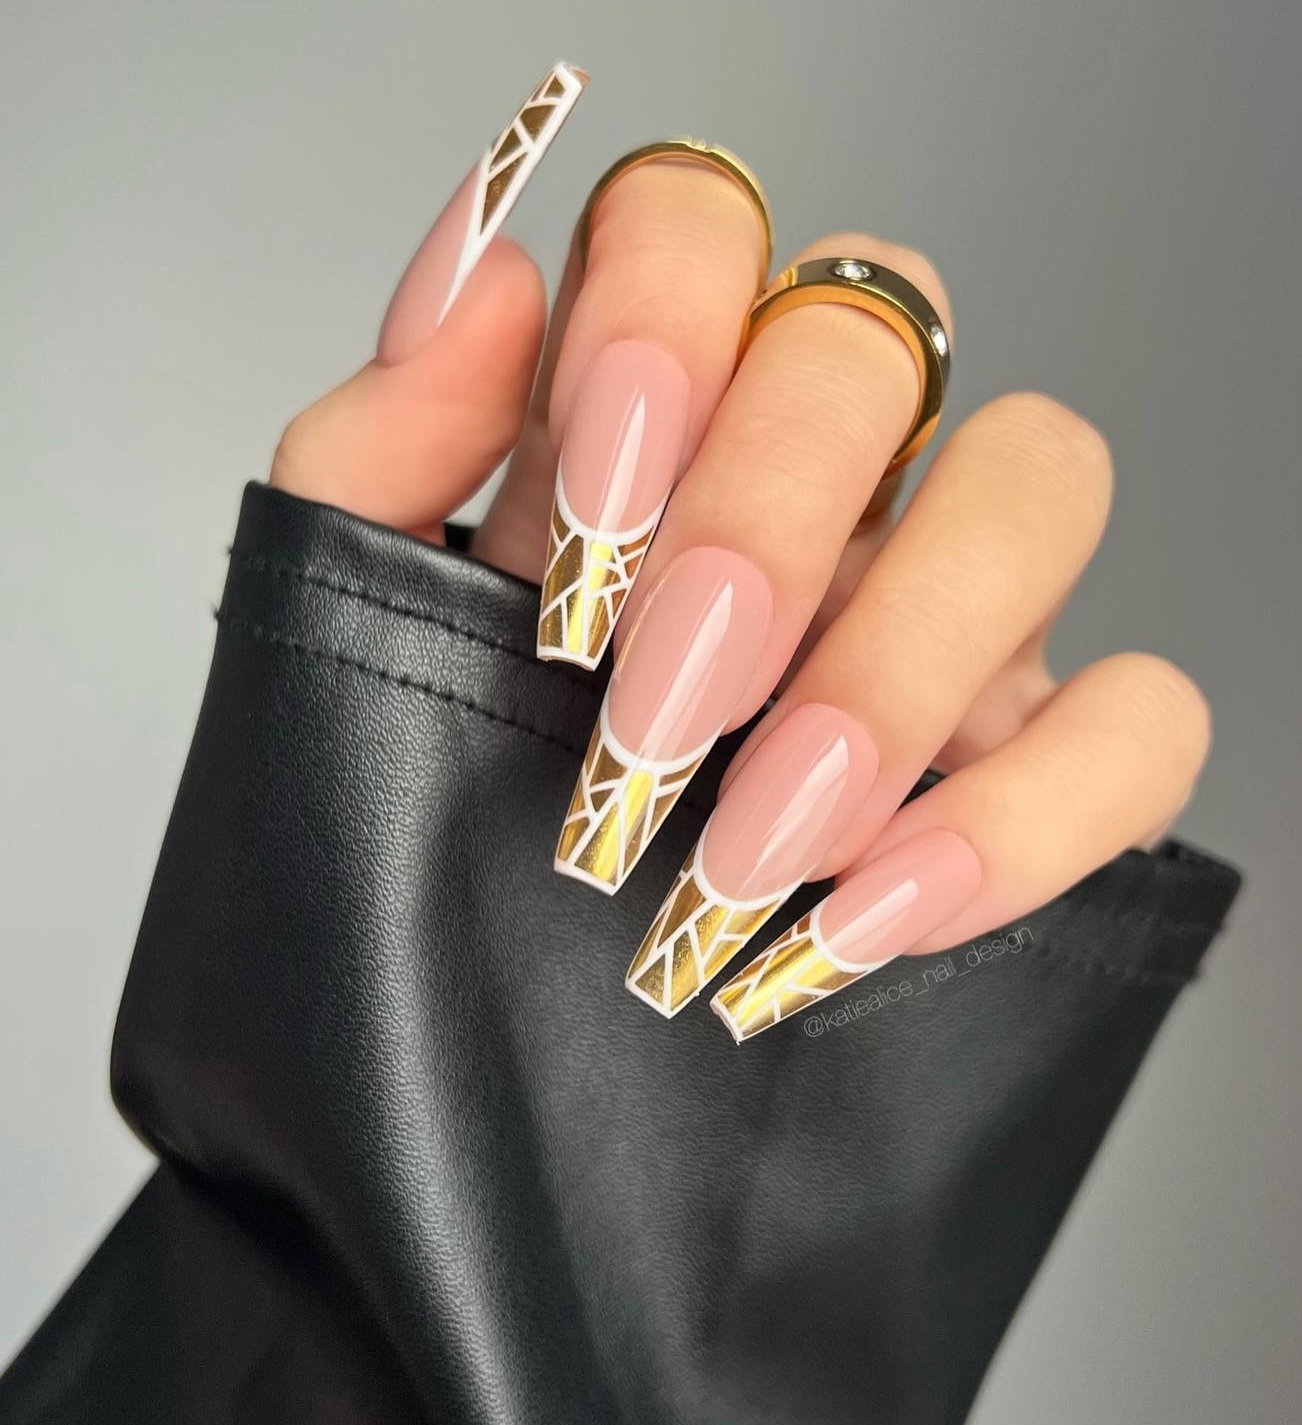 Kistvormige Franse nagels met gouden glittertips